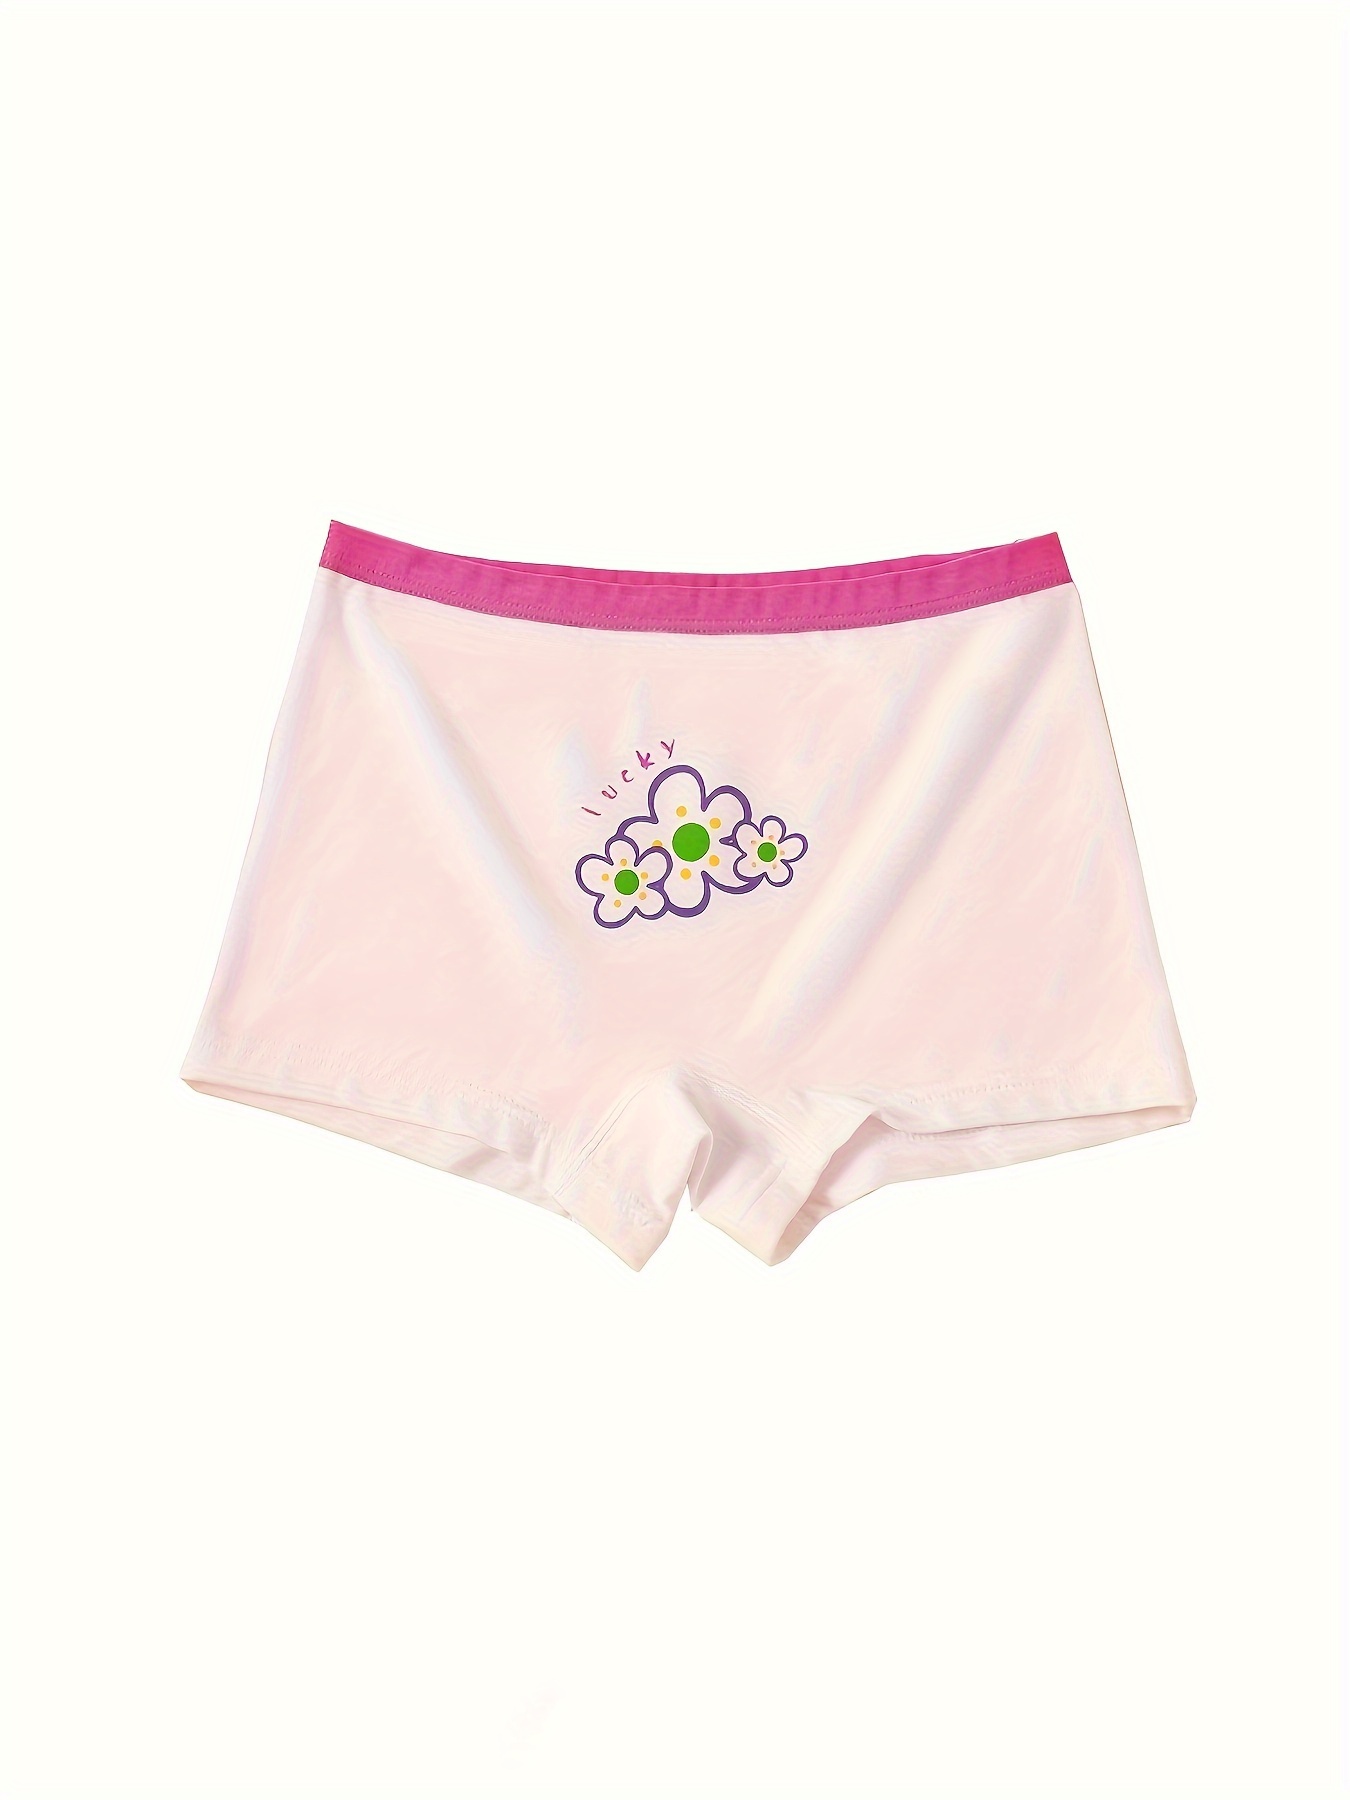 4Pcs Toddler Boys Underwear 95% Cotton Soft Breathable Cute Random Pattern  Comfy Boxers Briefs Under 12 Years